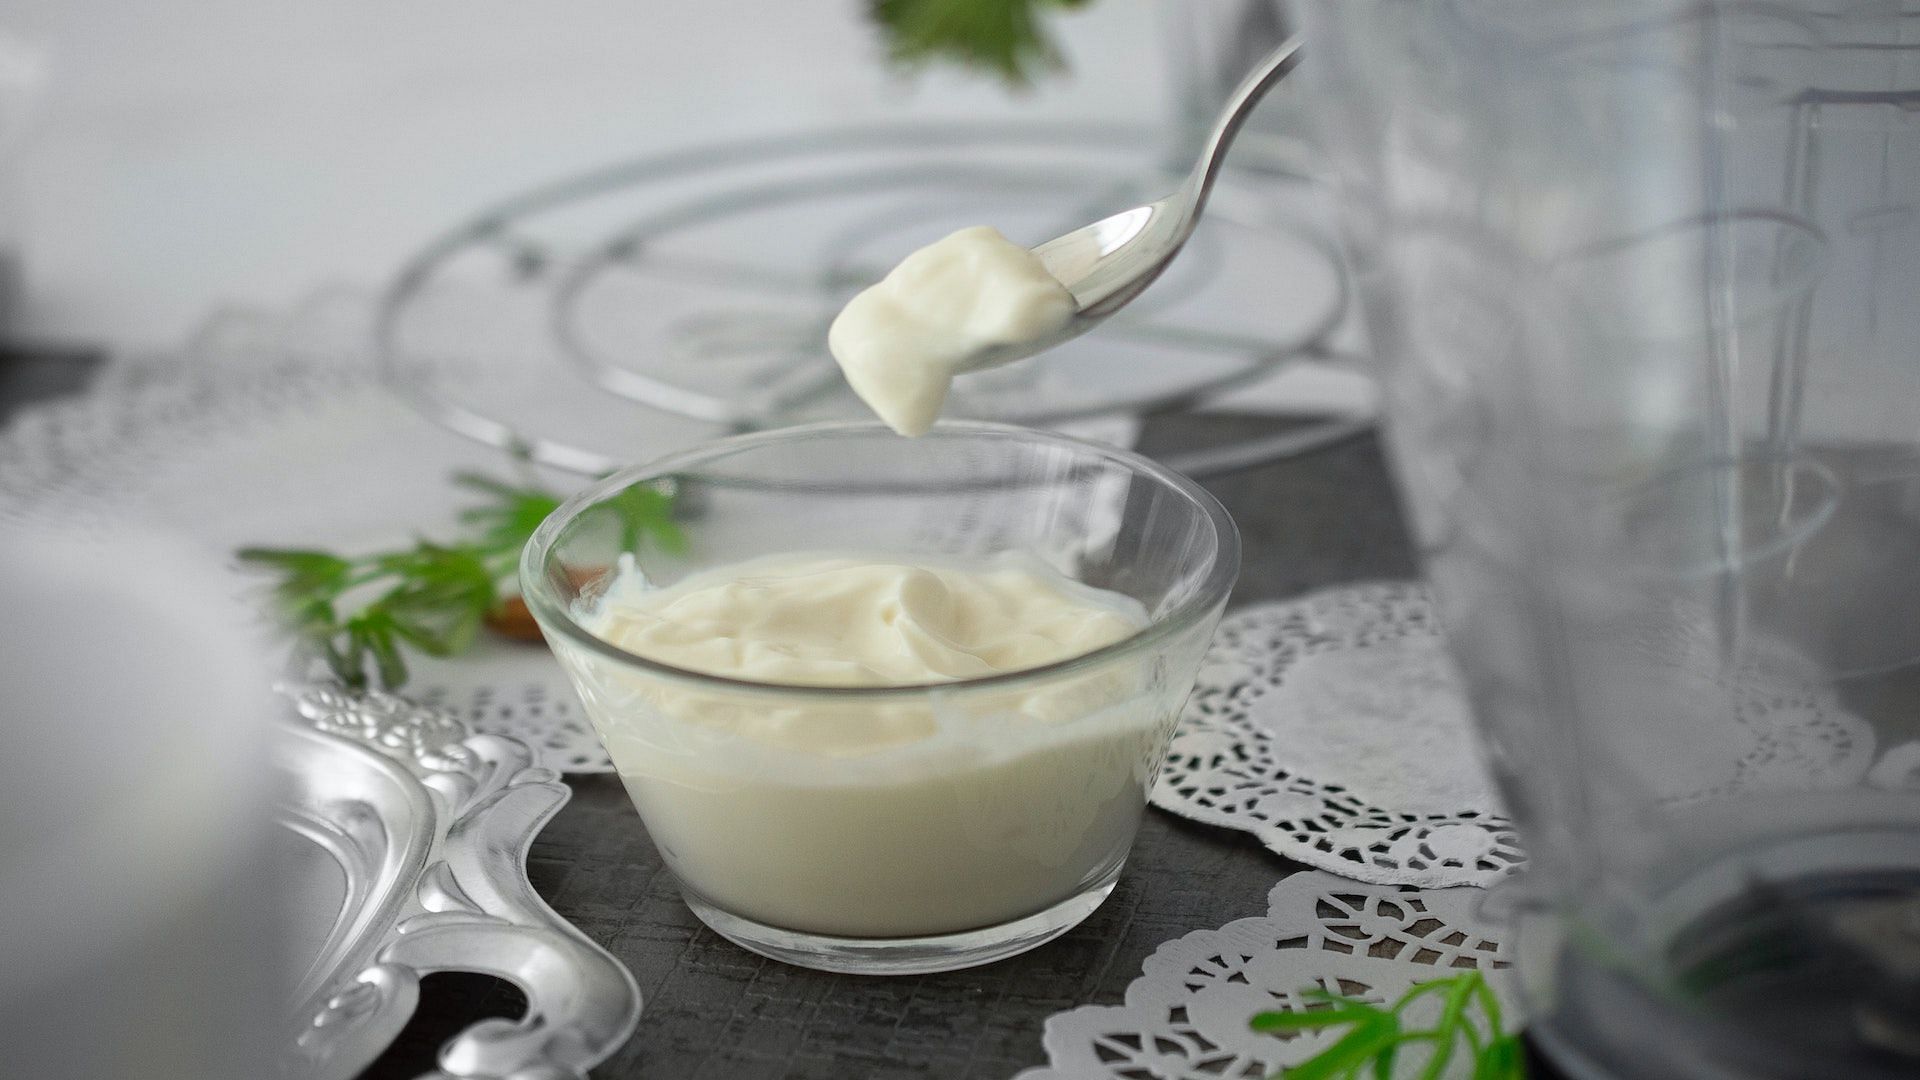 A cup of yogurt ater meals helps with digestion. Image via Unsplash/Sara Cervera